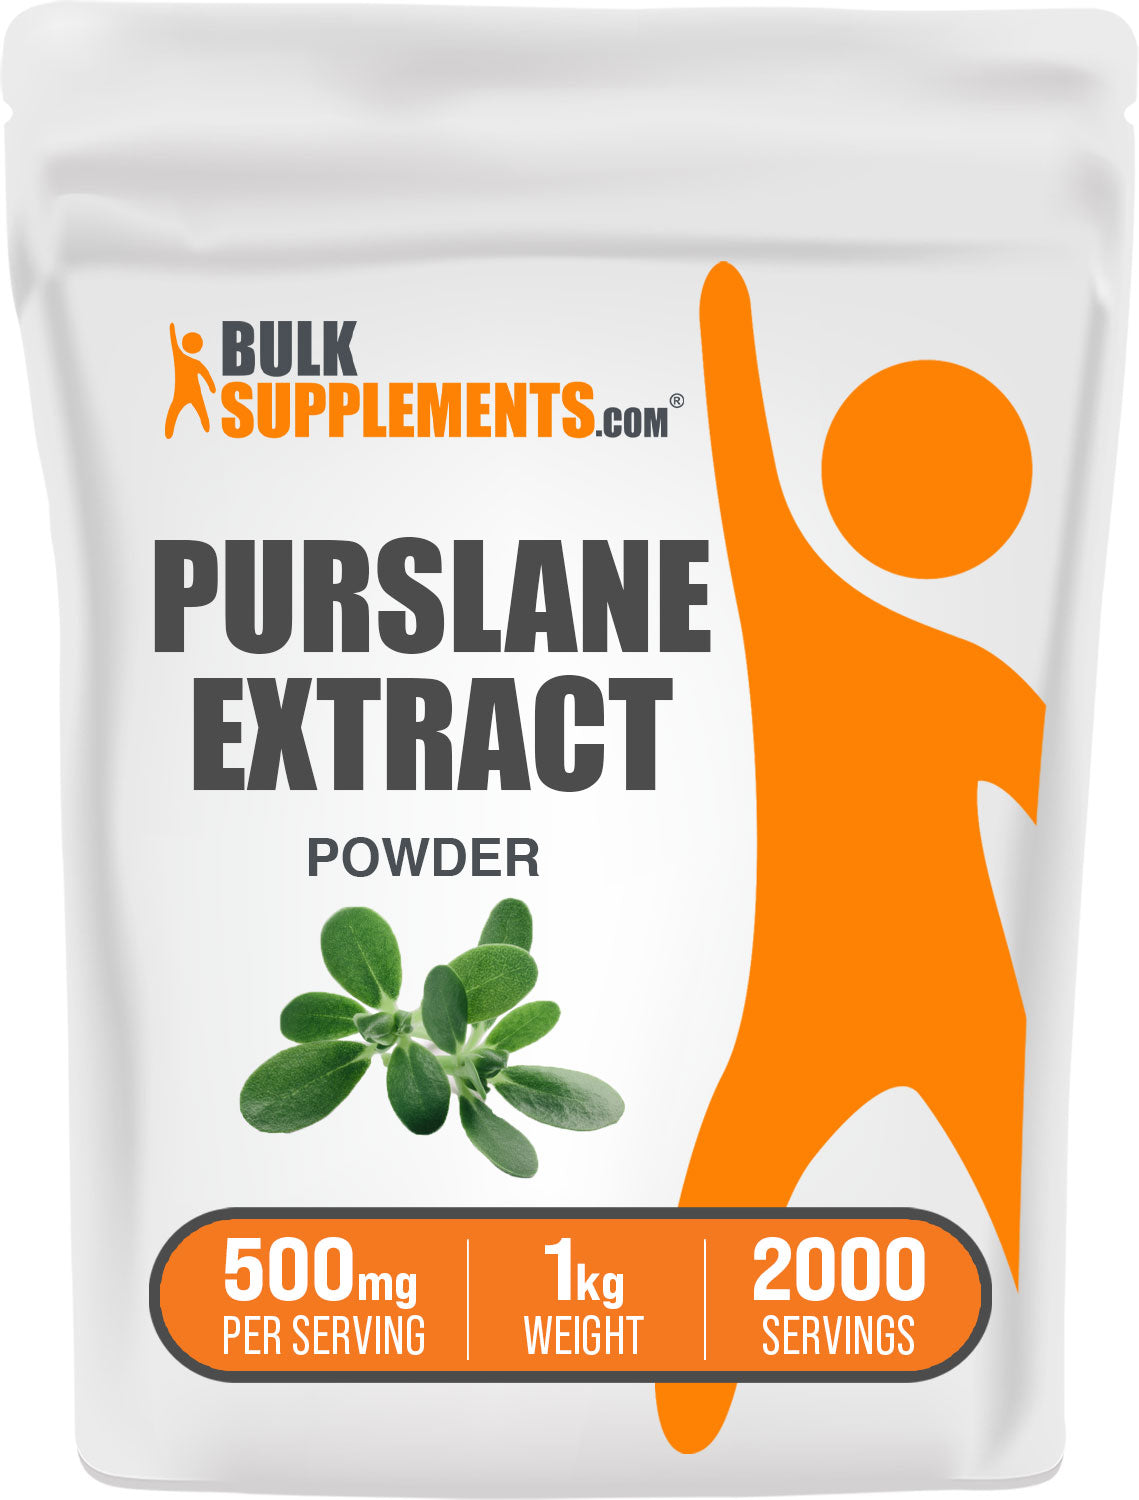 Purslane Extract 1kg Bag